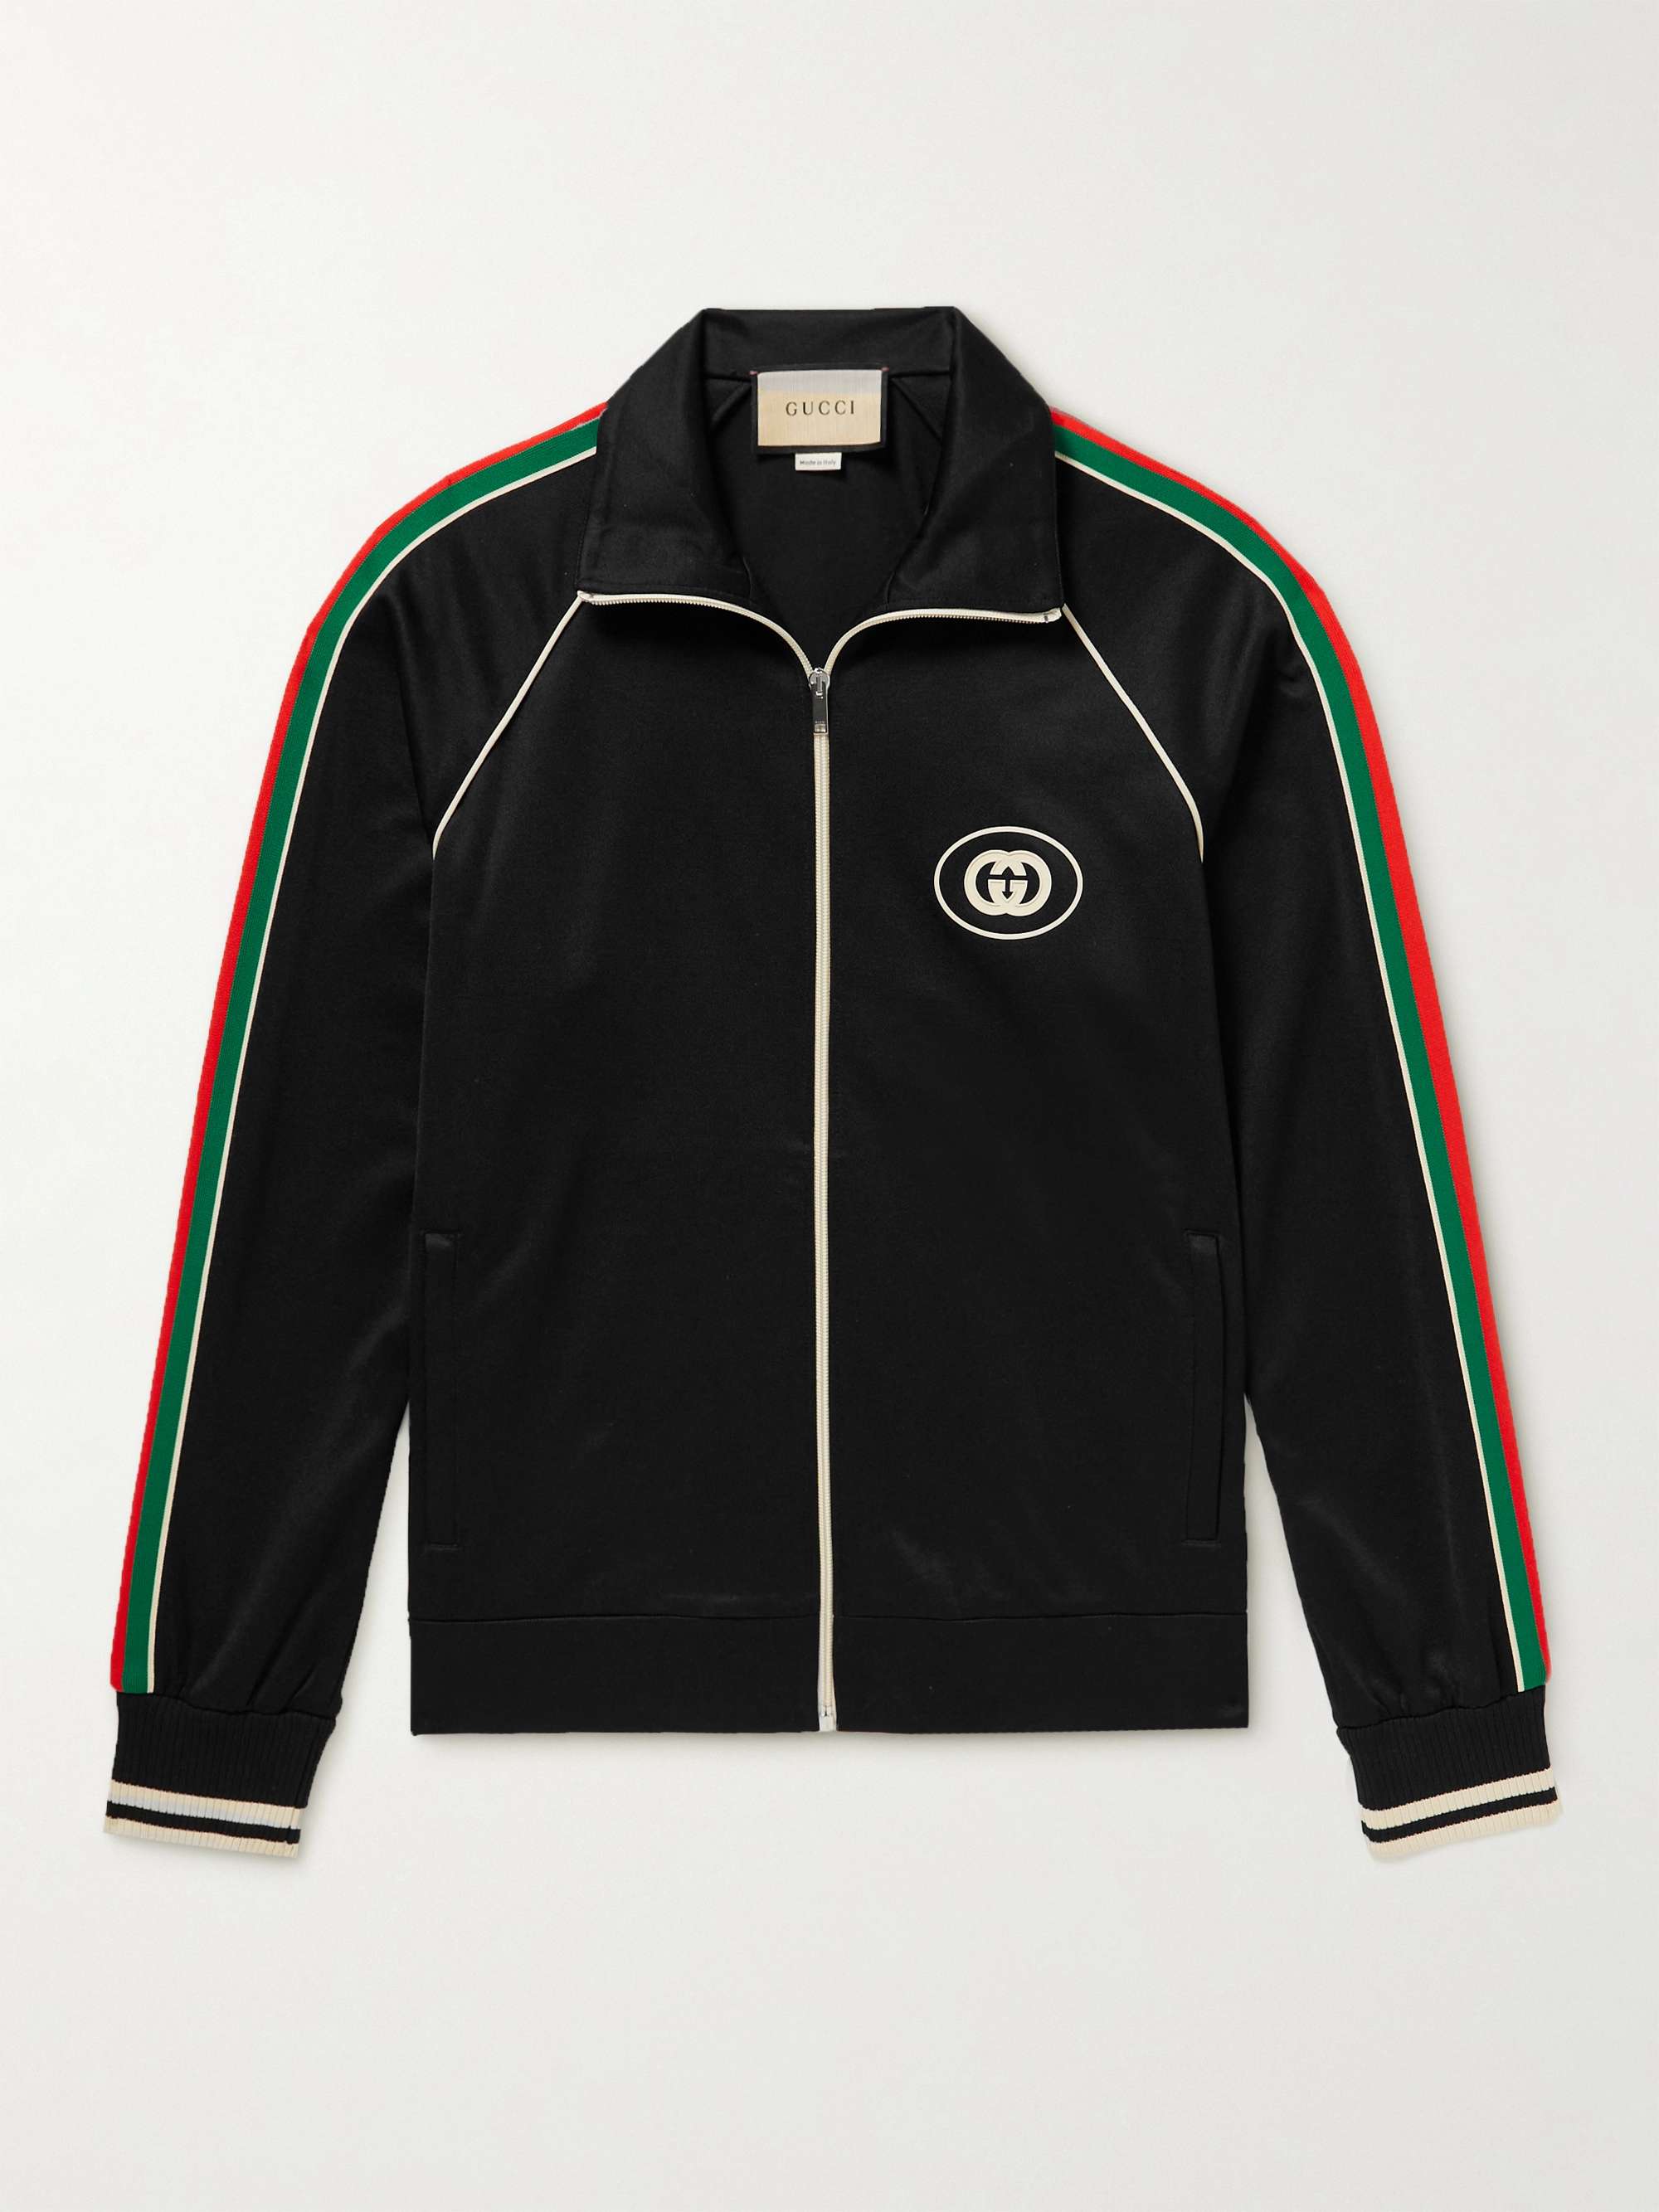 Gucci Men's Logo-Appliquéd Striped Track Jacket